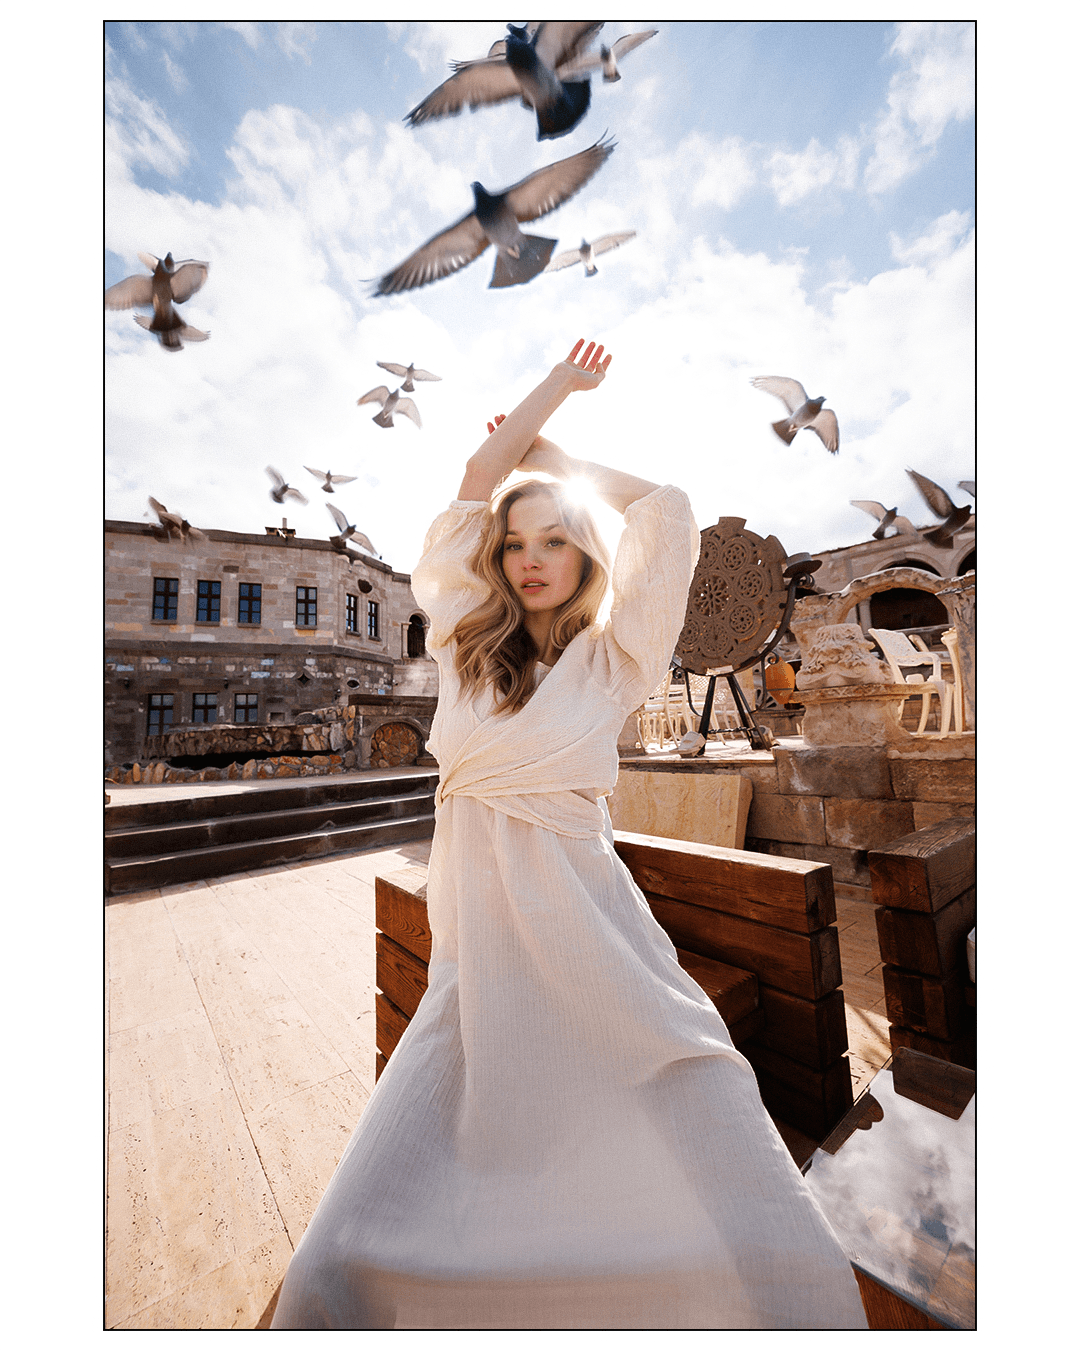 cappadocia hotel pigeons portrait Fashion  Travel